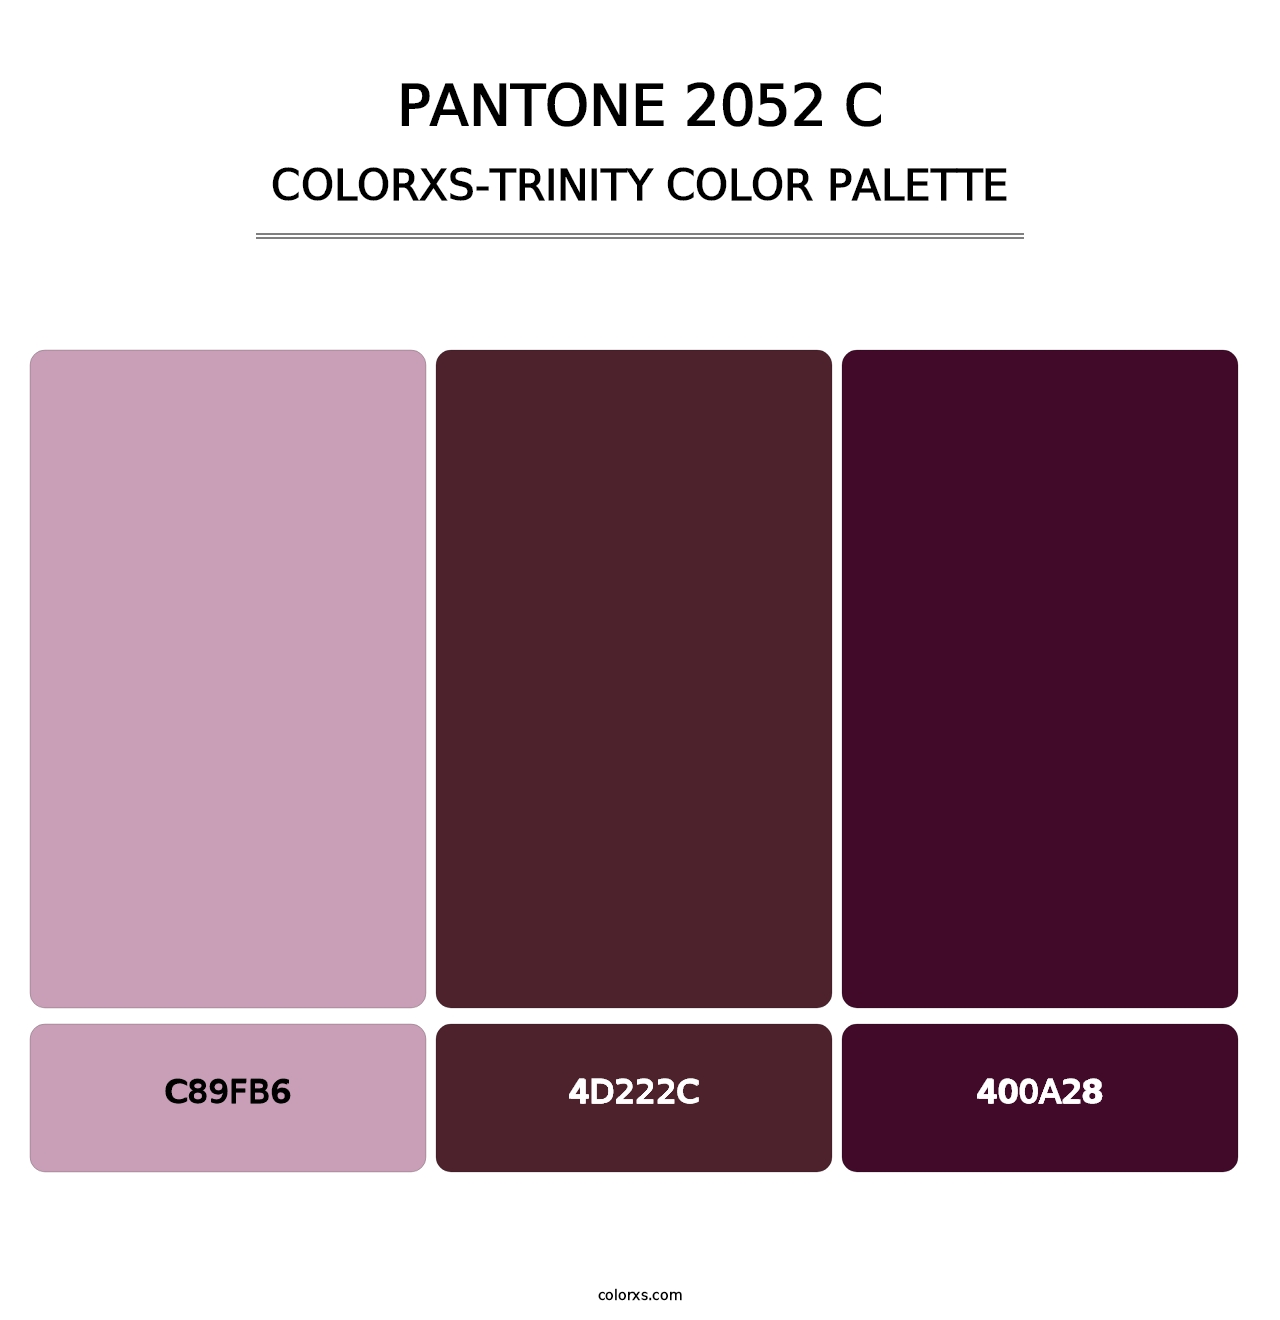 PANTONE 2052 C - Colorxs Trinity Palette